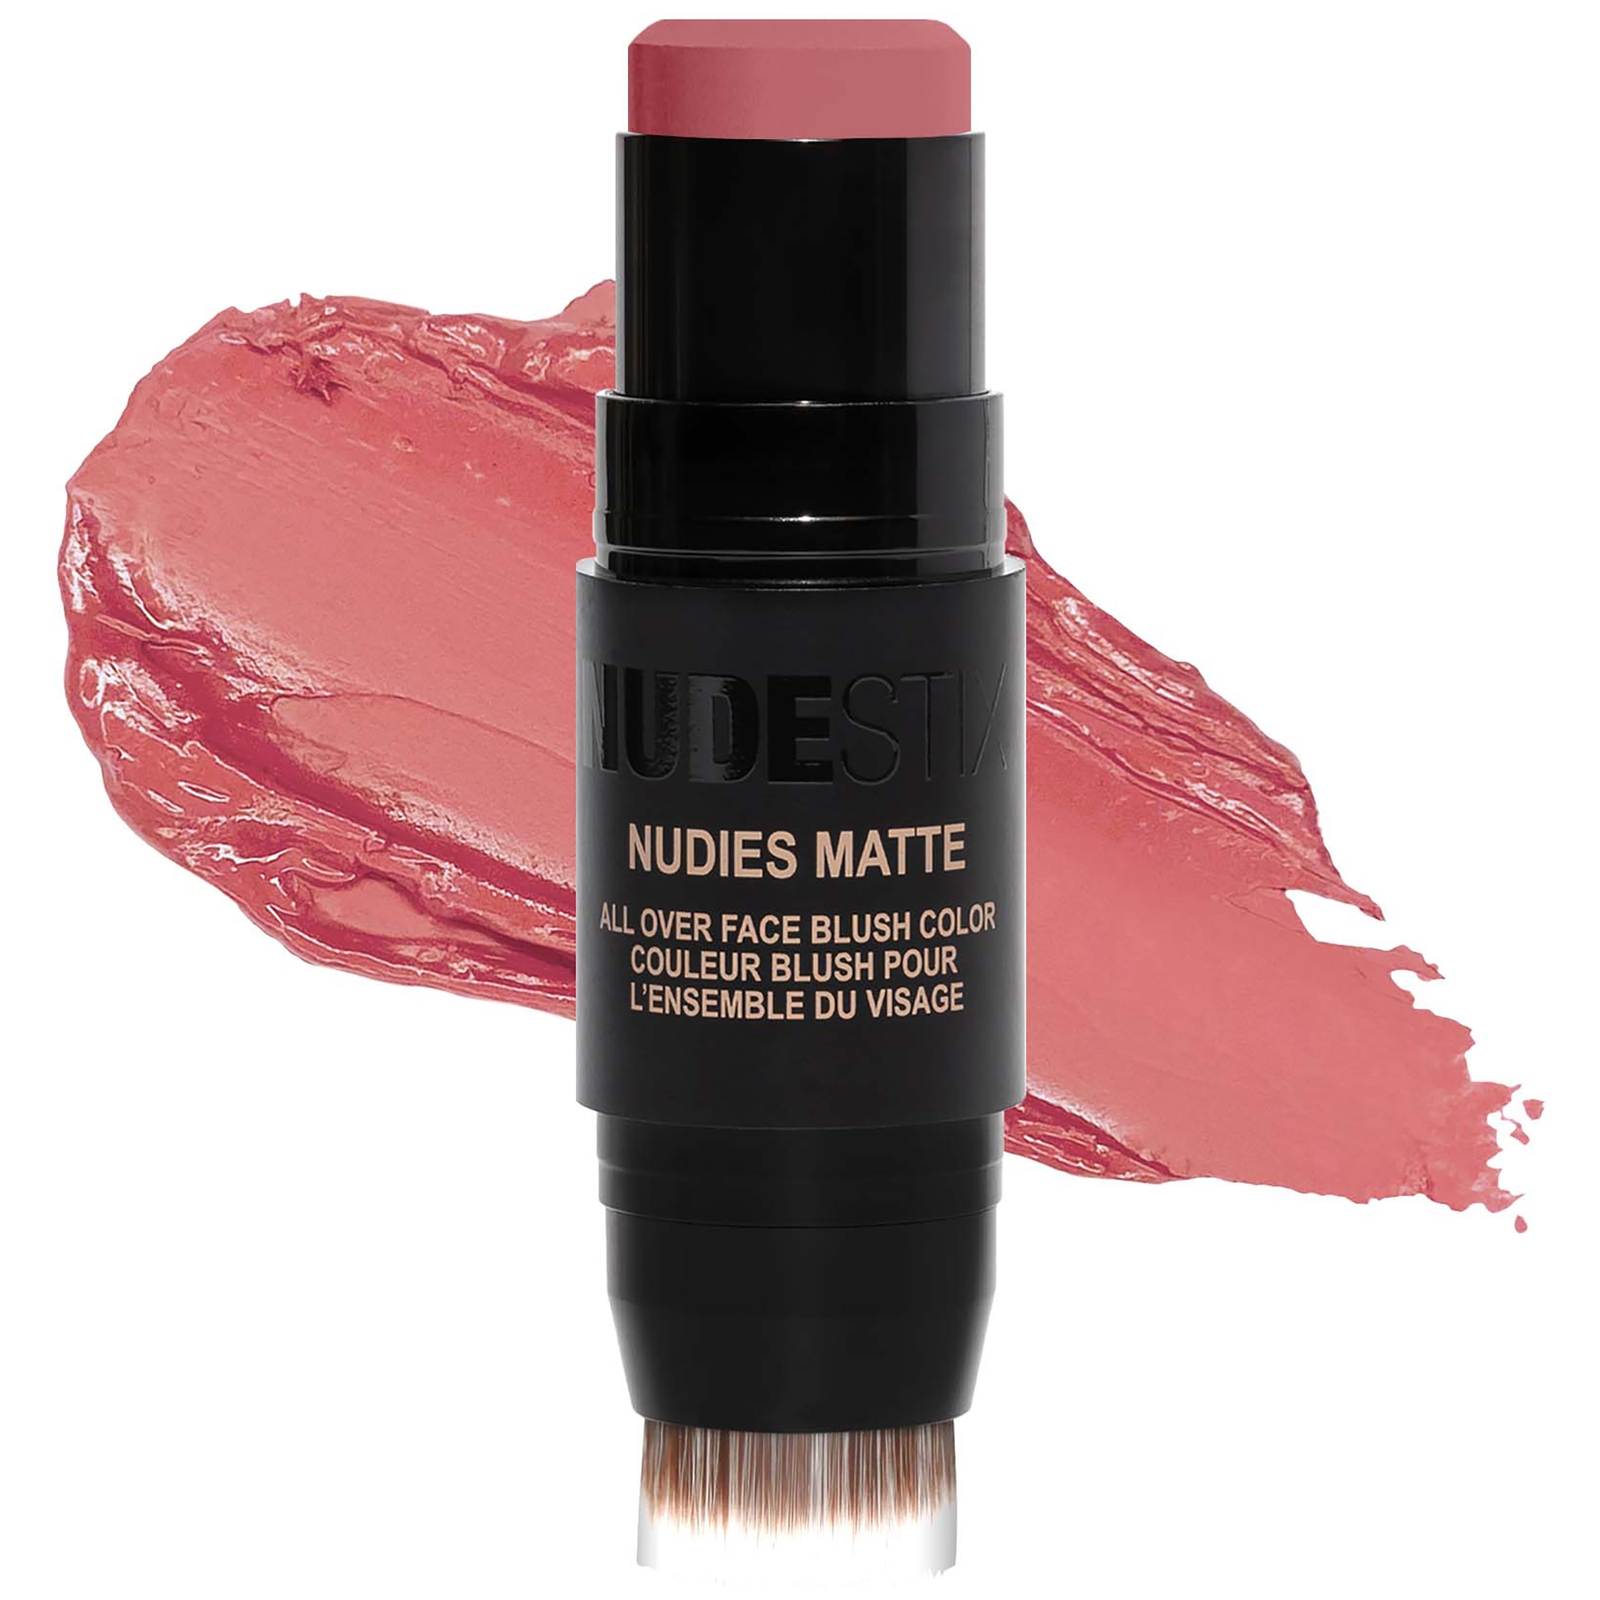 NUDESTIX Nudies Matte All Over Face Blush Colour 7g (Various Shades) - Cherie